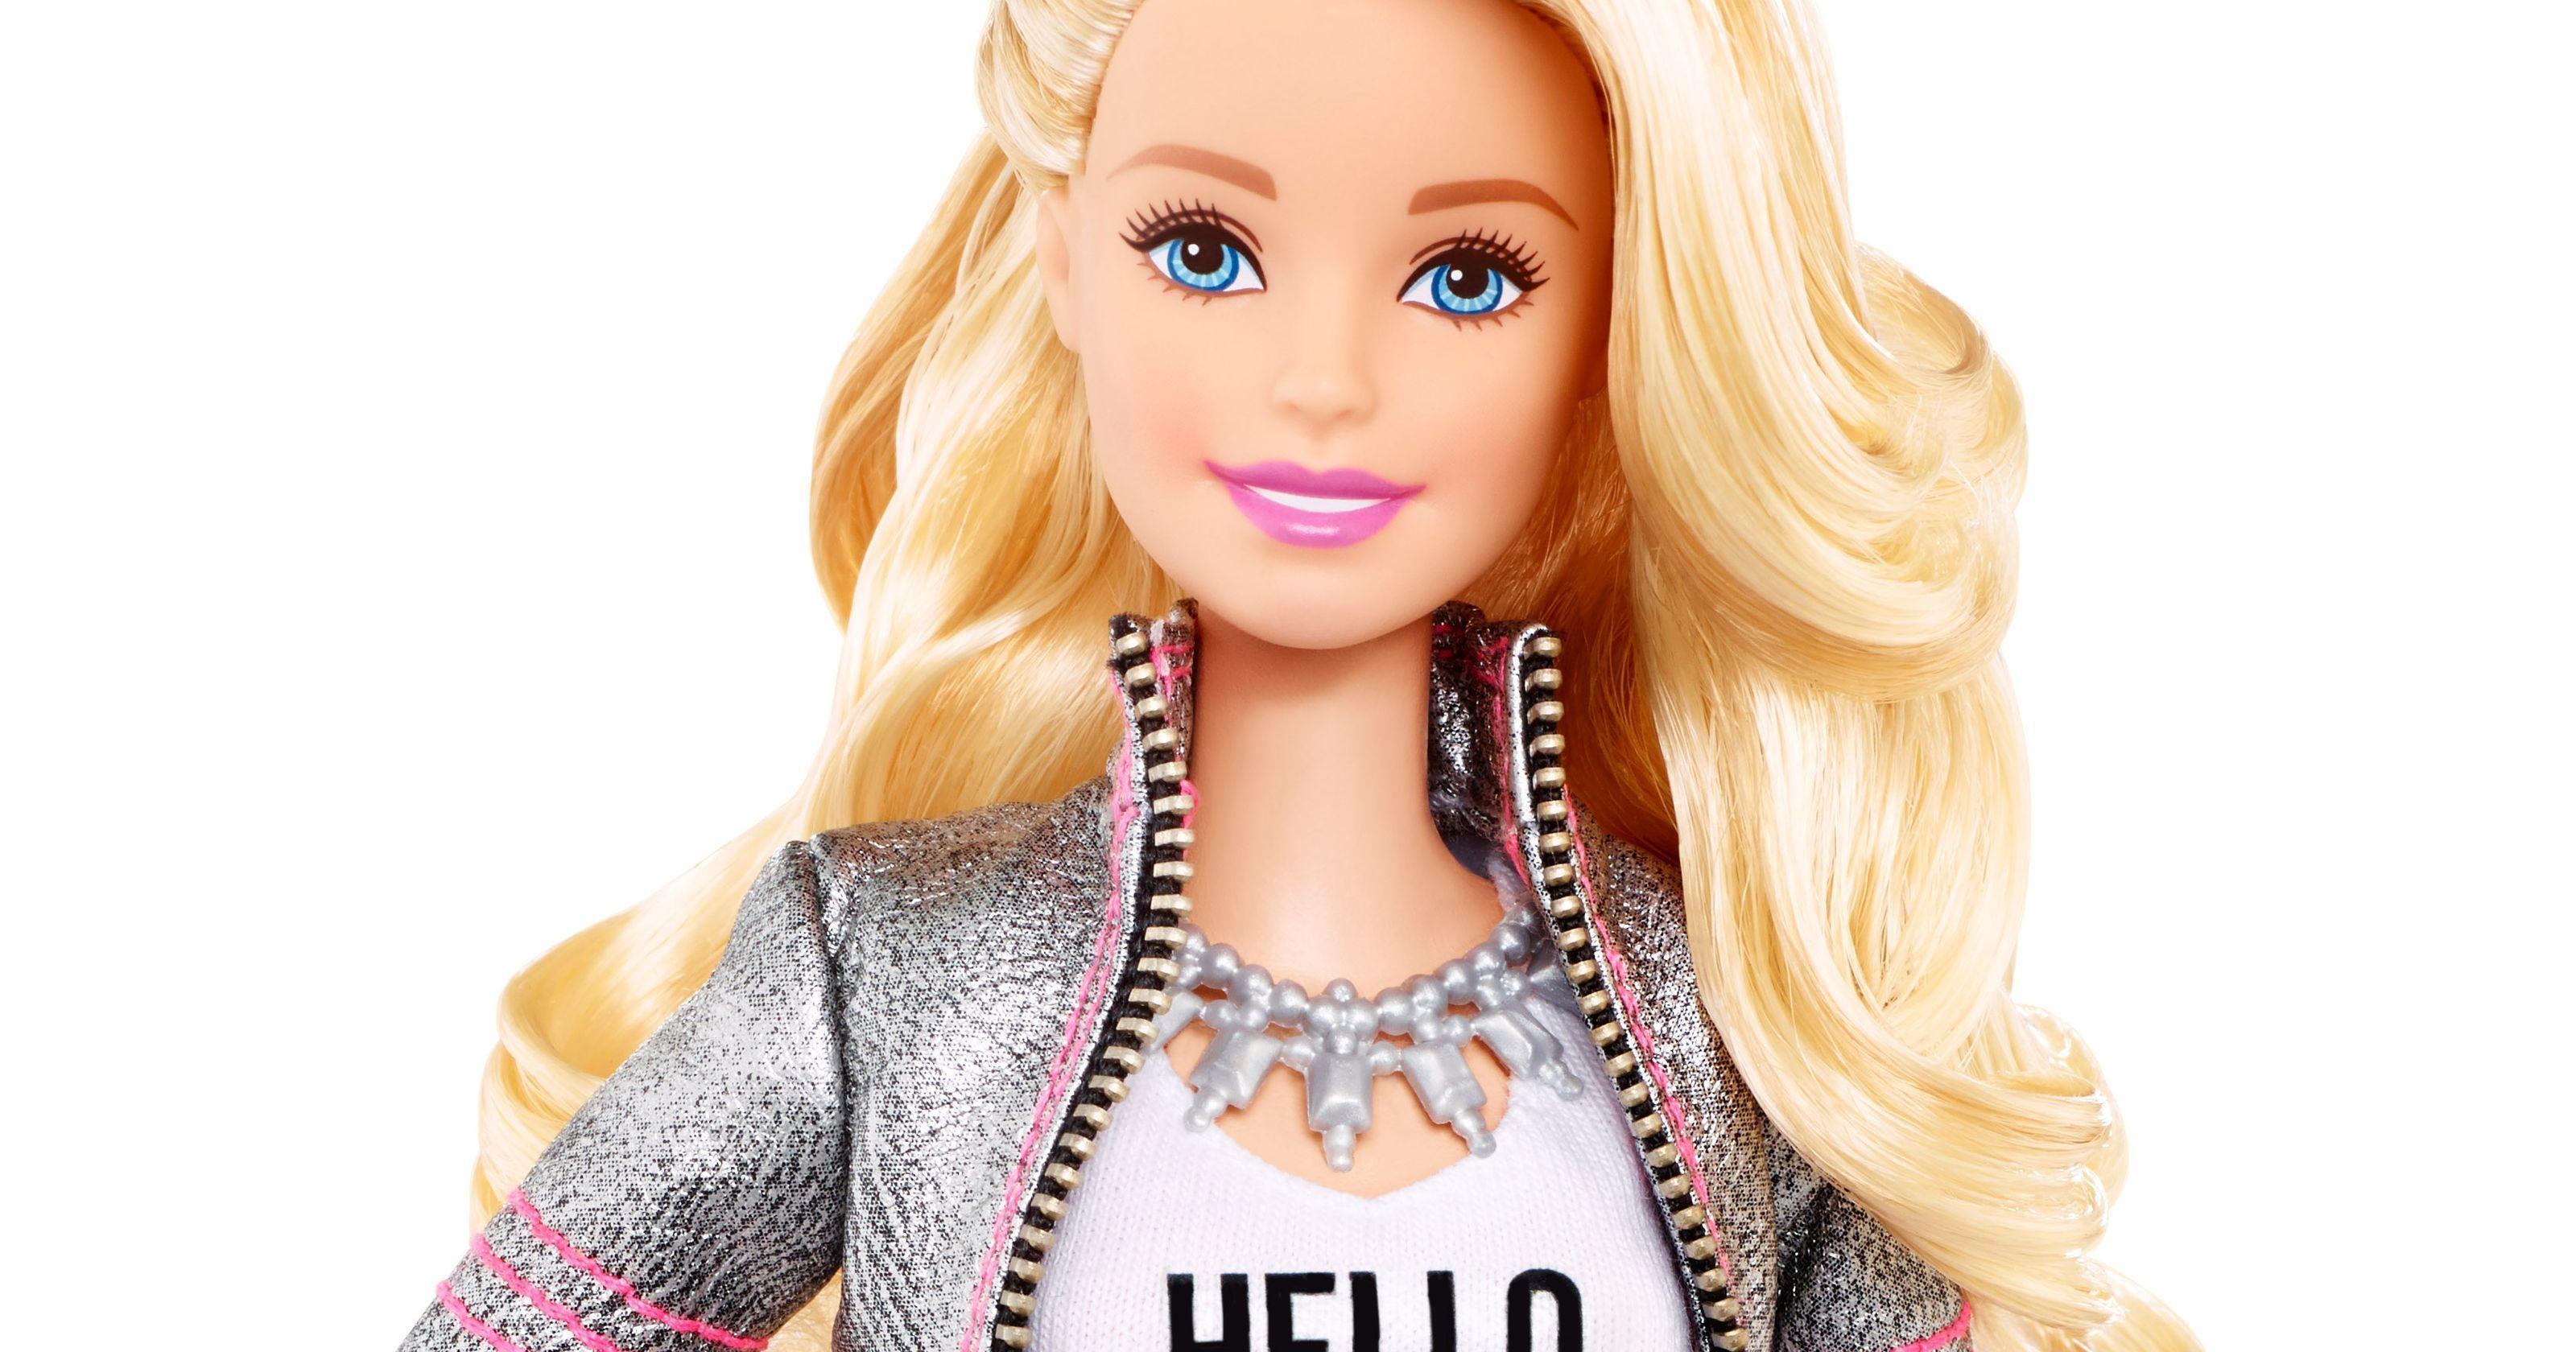 High Tech &;talking&; Barbie Bad Idea, Group Says